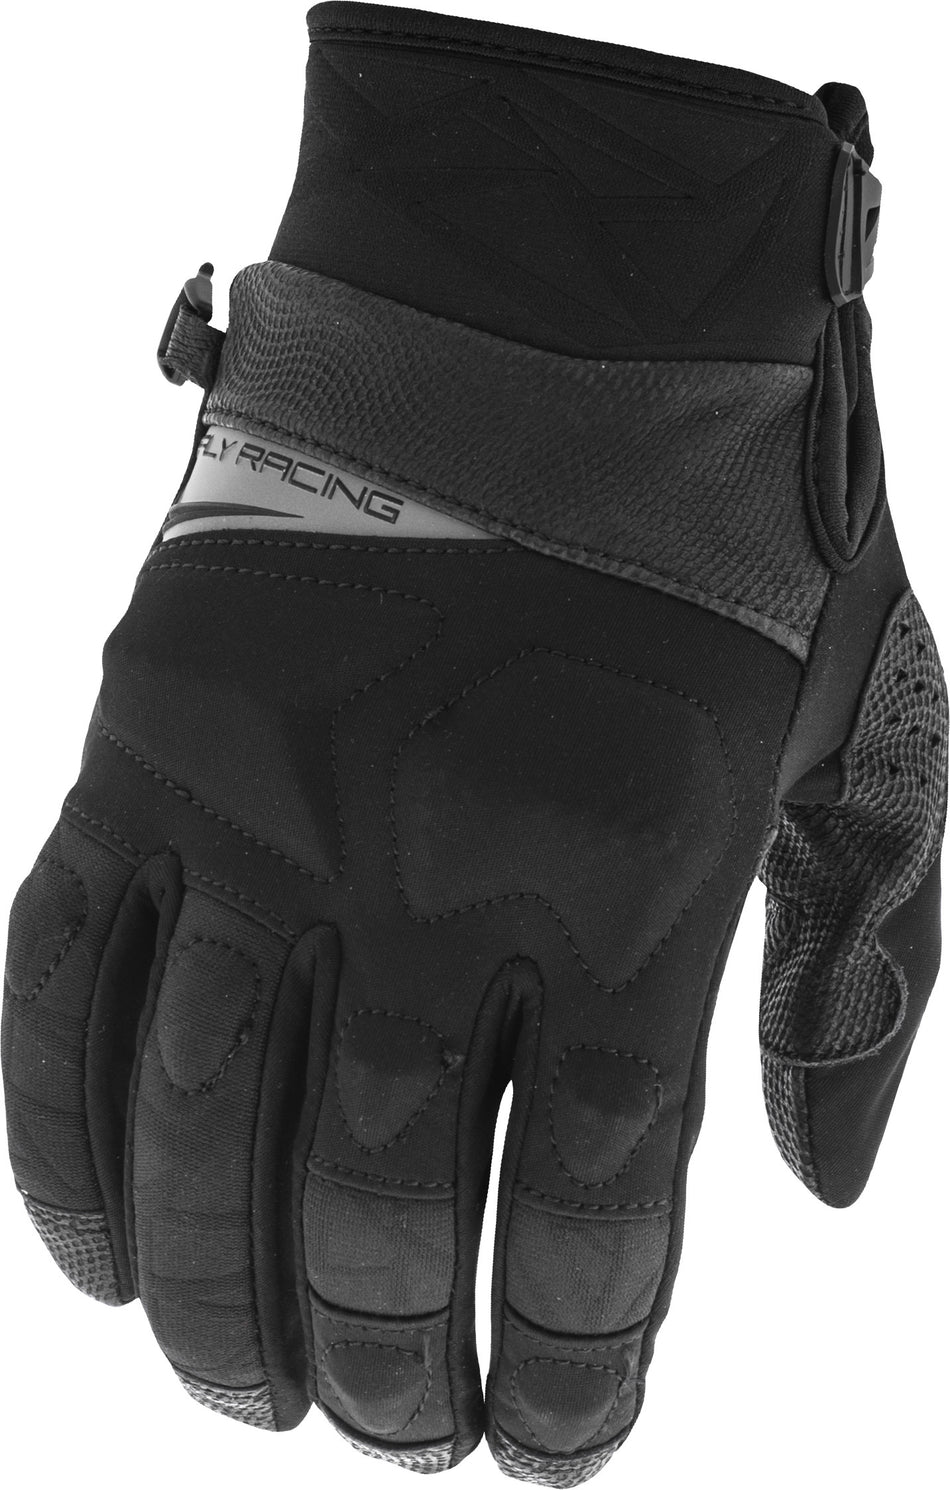 FLY RACING Boundary Gloves Black Sz 07 371-03007